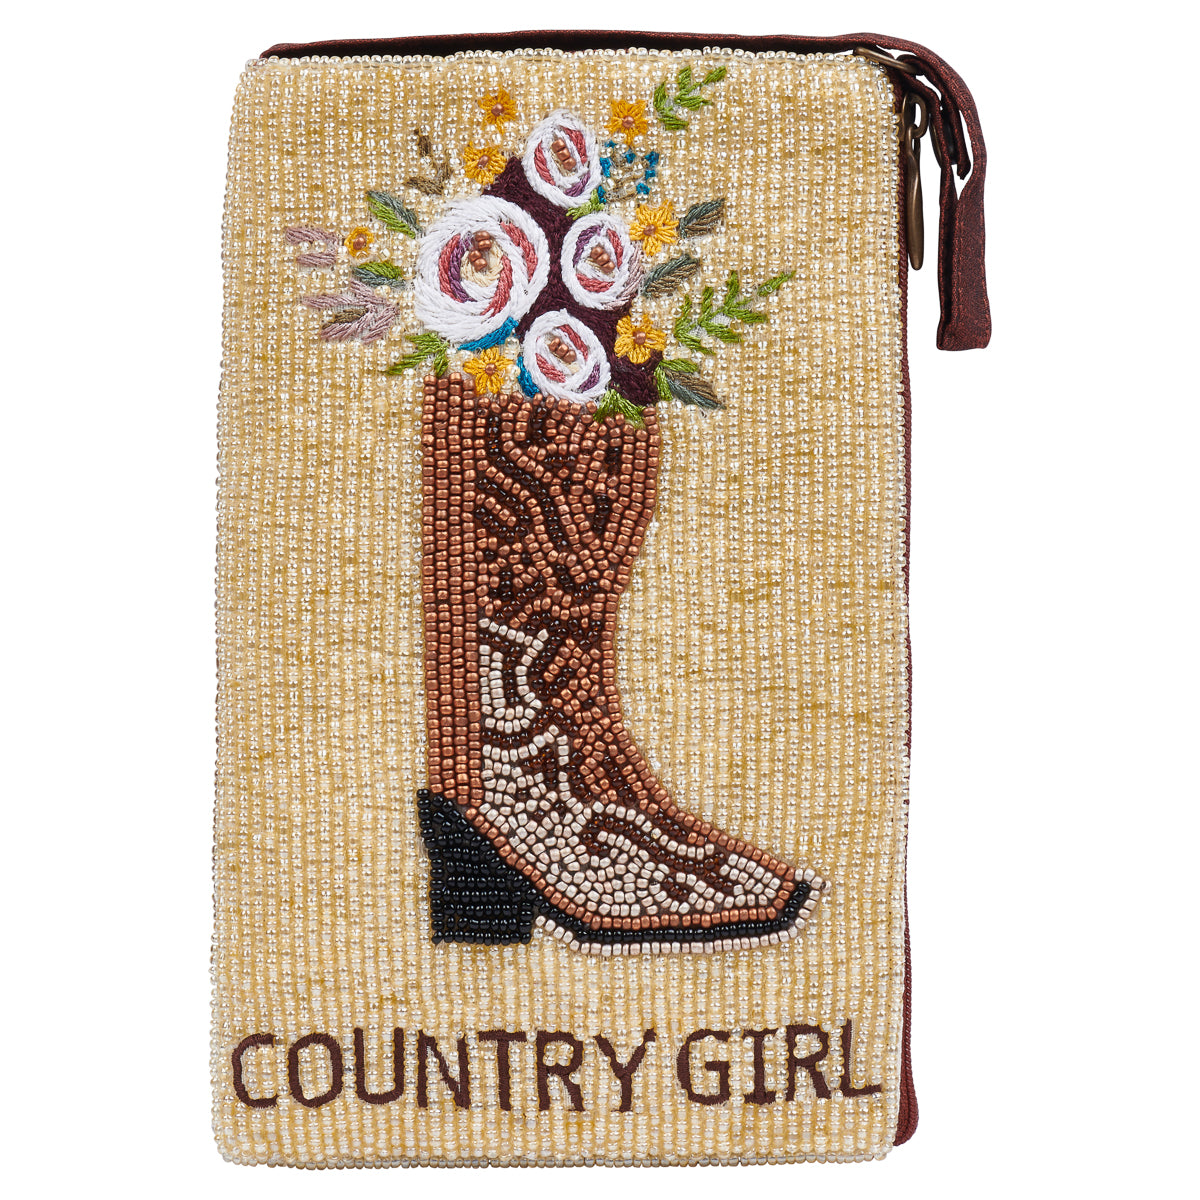 Country Girl Club Bag